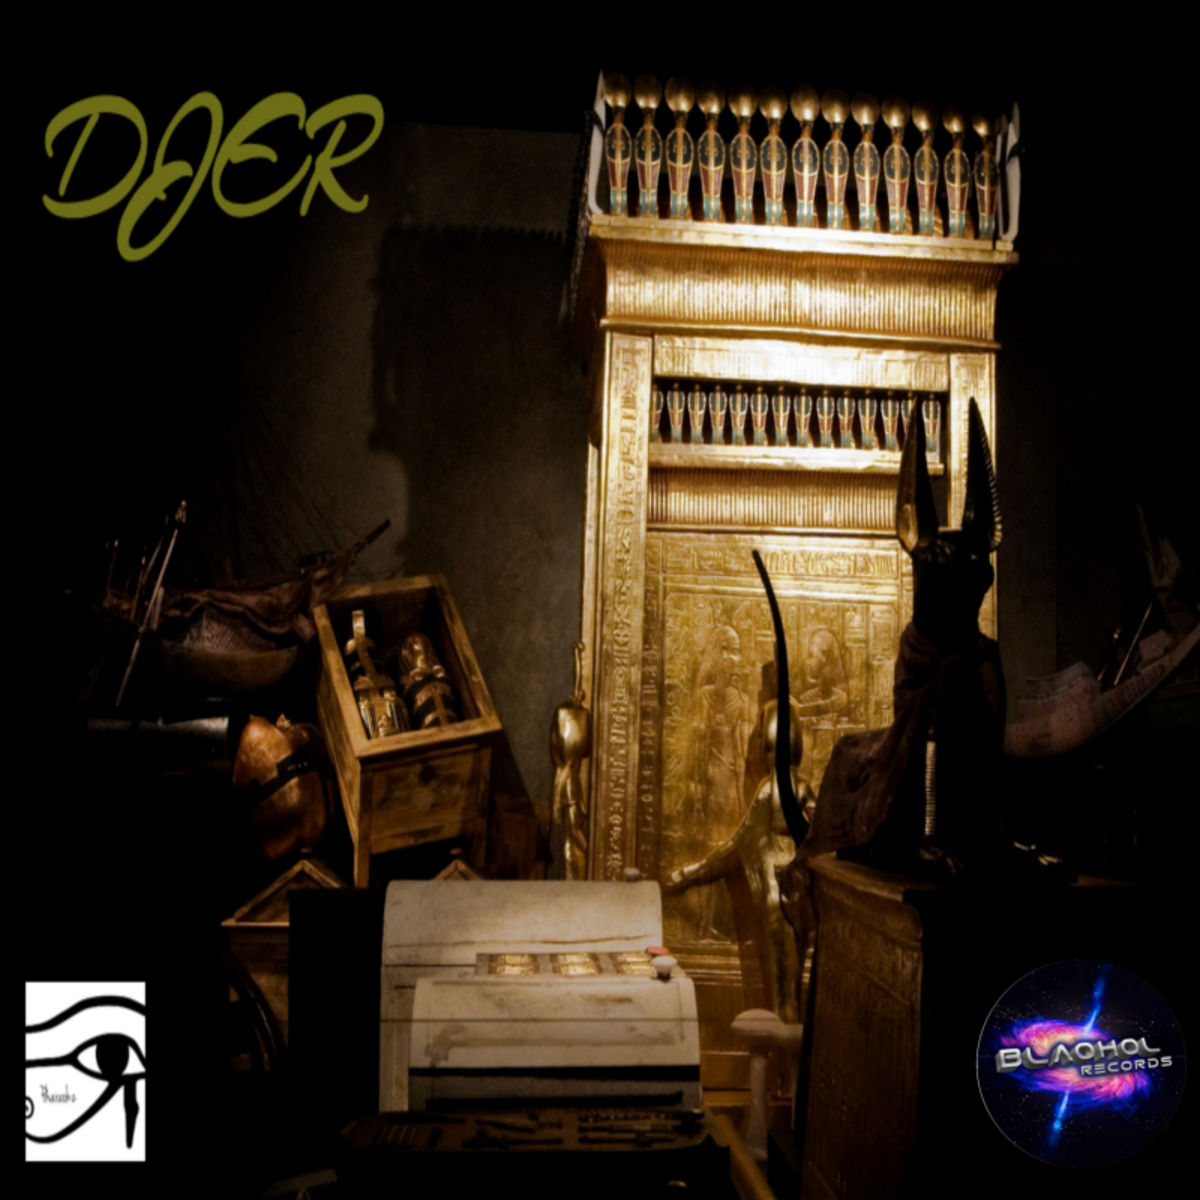 Pharaohz - Djer / Blaqhol Records